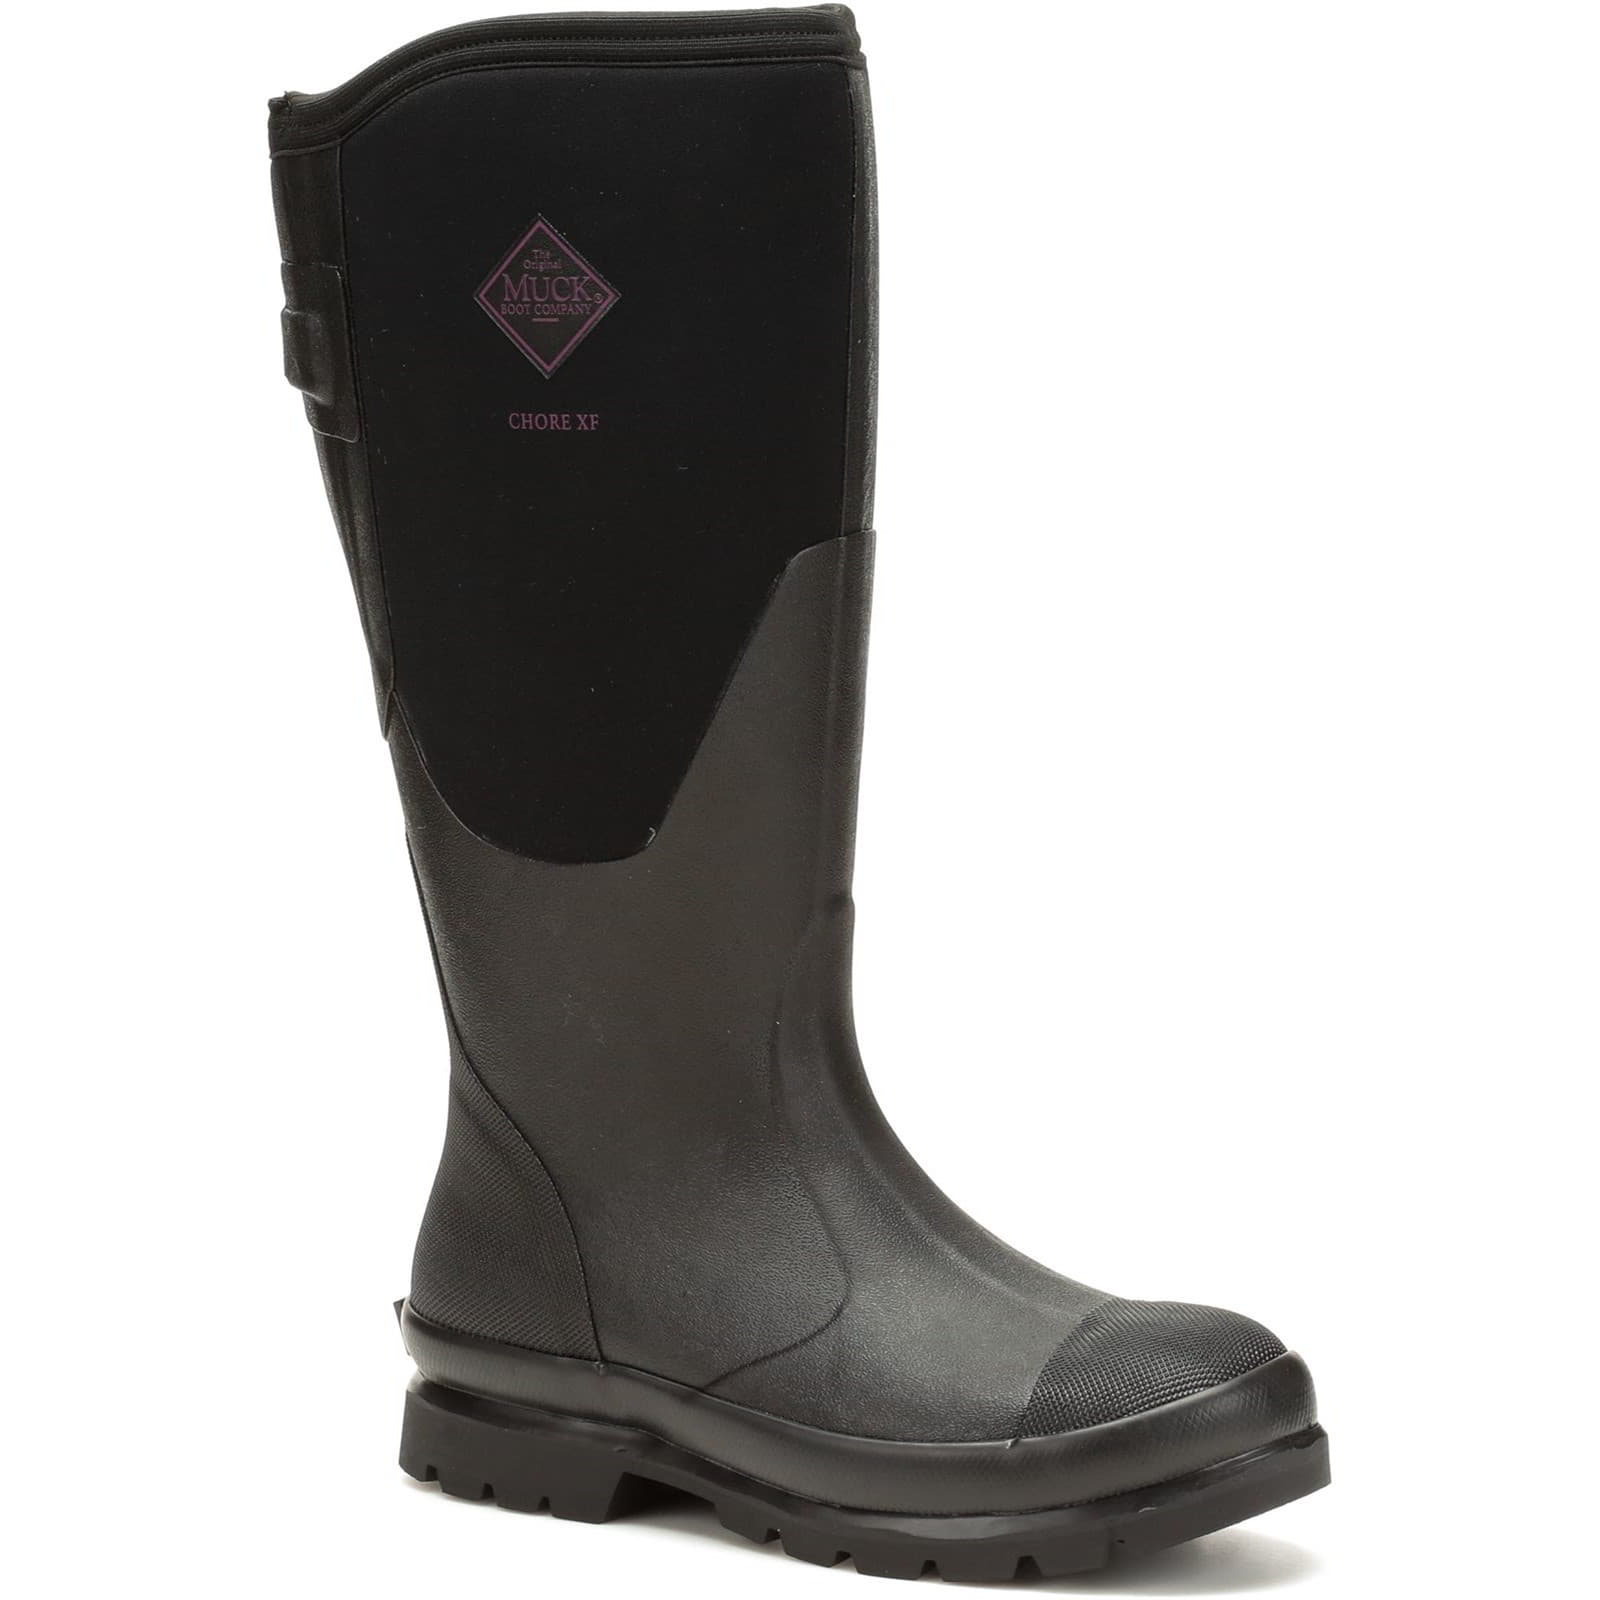 Muck Boots Women's Chore Adjustable Tall Neoprene Wellington Boots Wellies - UK 6